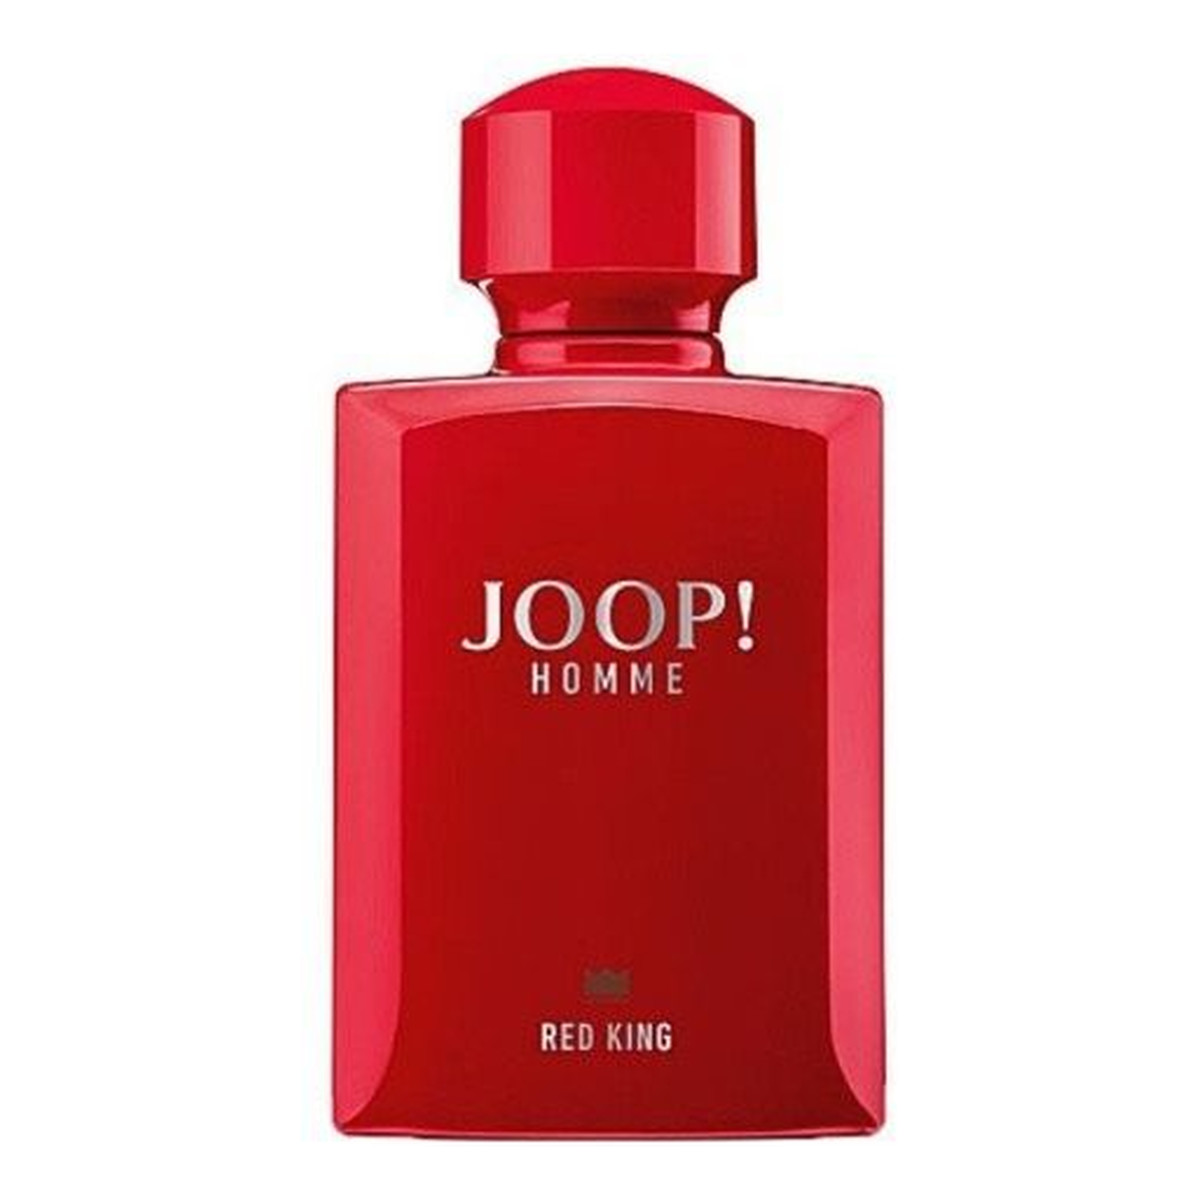 Joop! Homme Red King Limited Edition Woda toaletowa 125ml